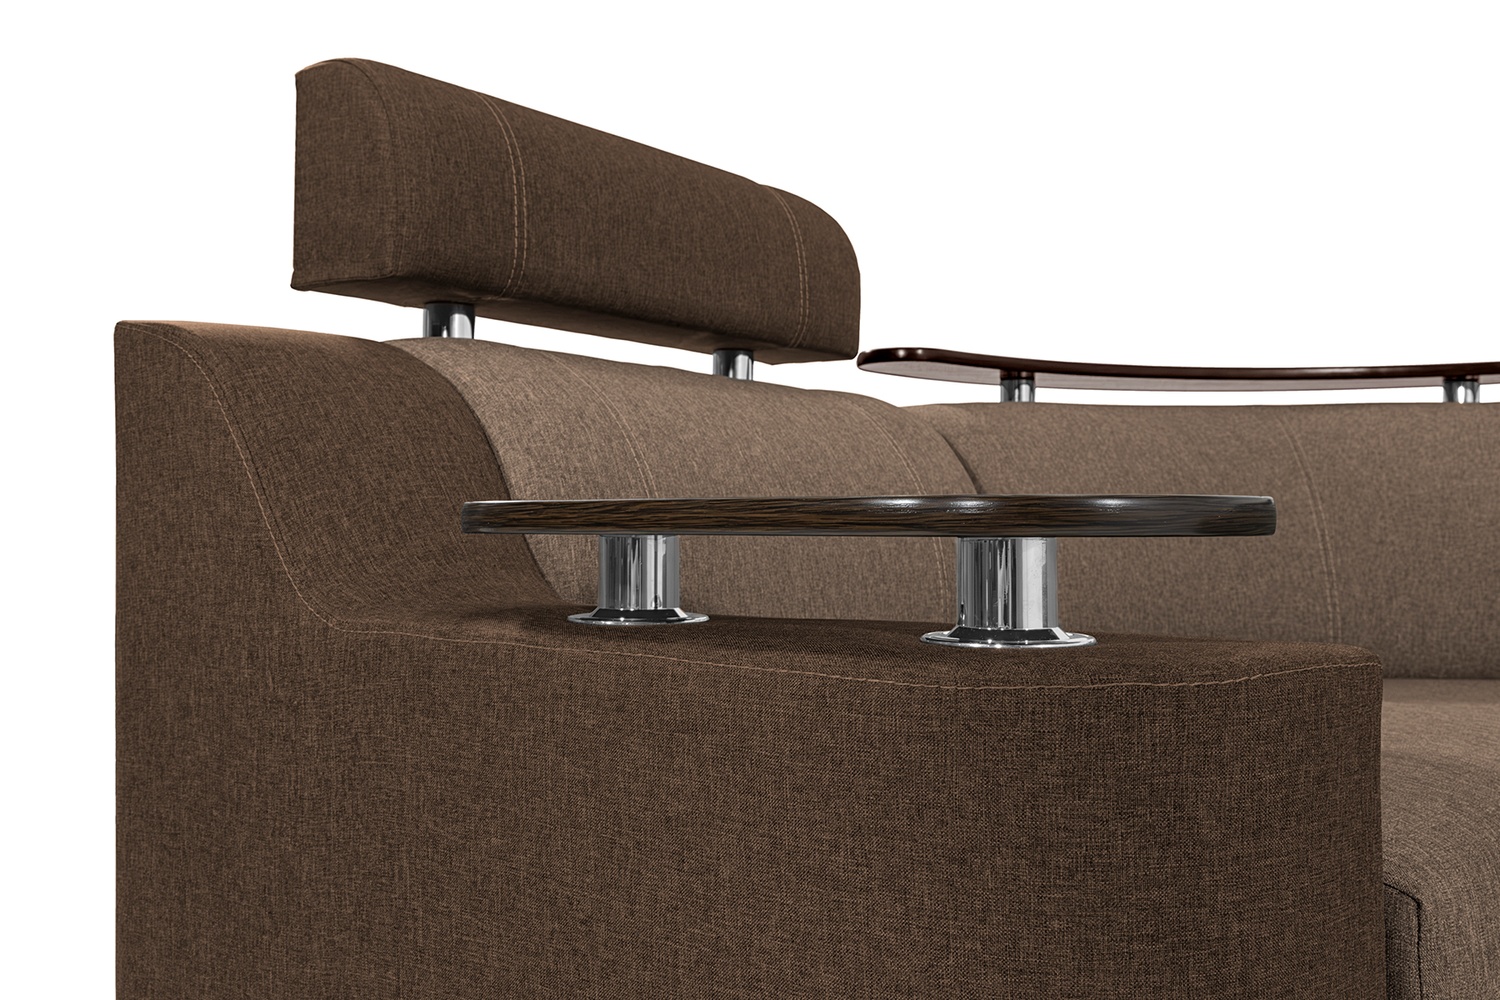 Угловой диван Невада (бежевый с коричневым, 255х185 см) IMI knvd-sn-21-3 фото